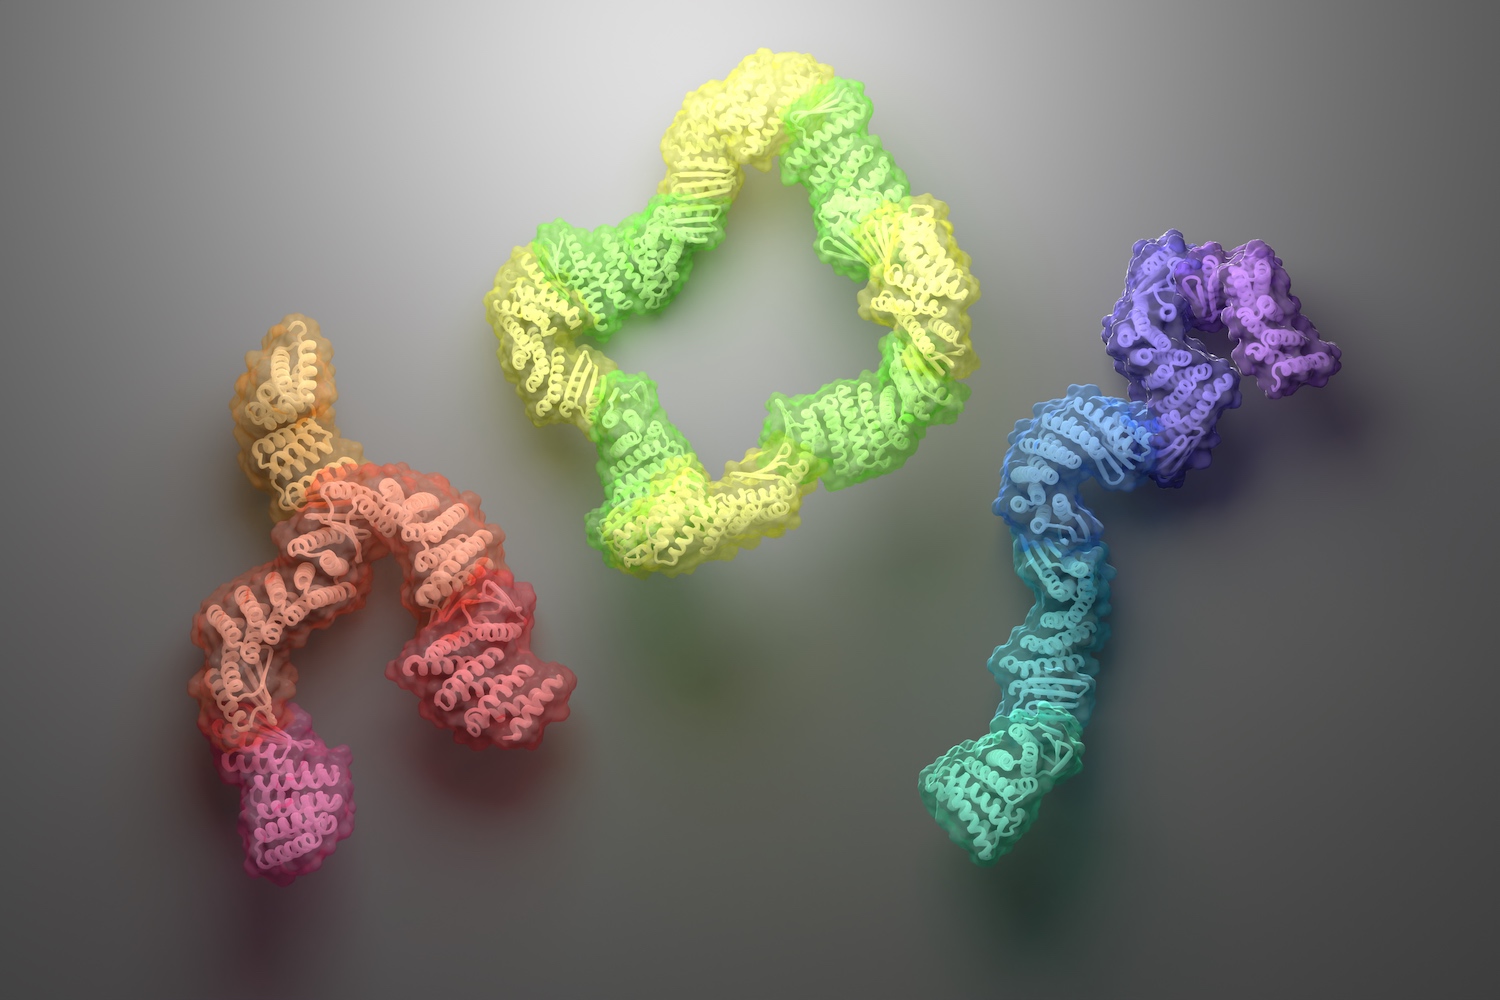 Diverse protein assemblies by (negative) design